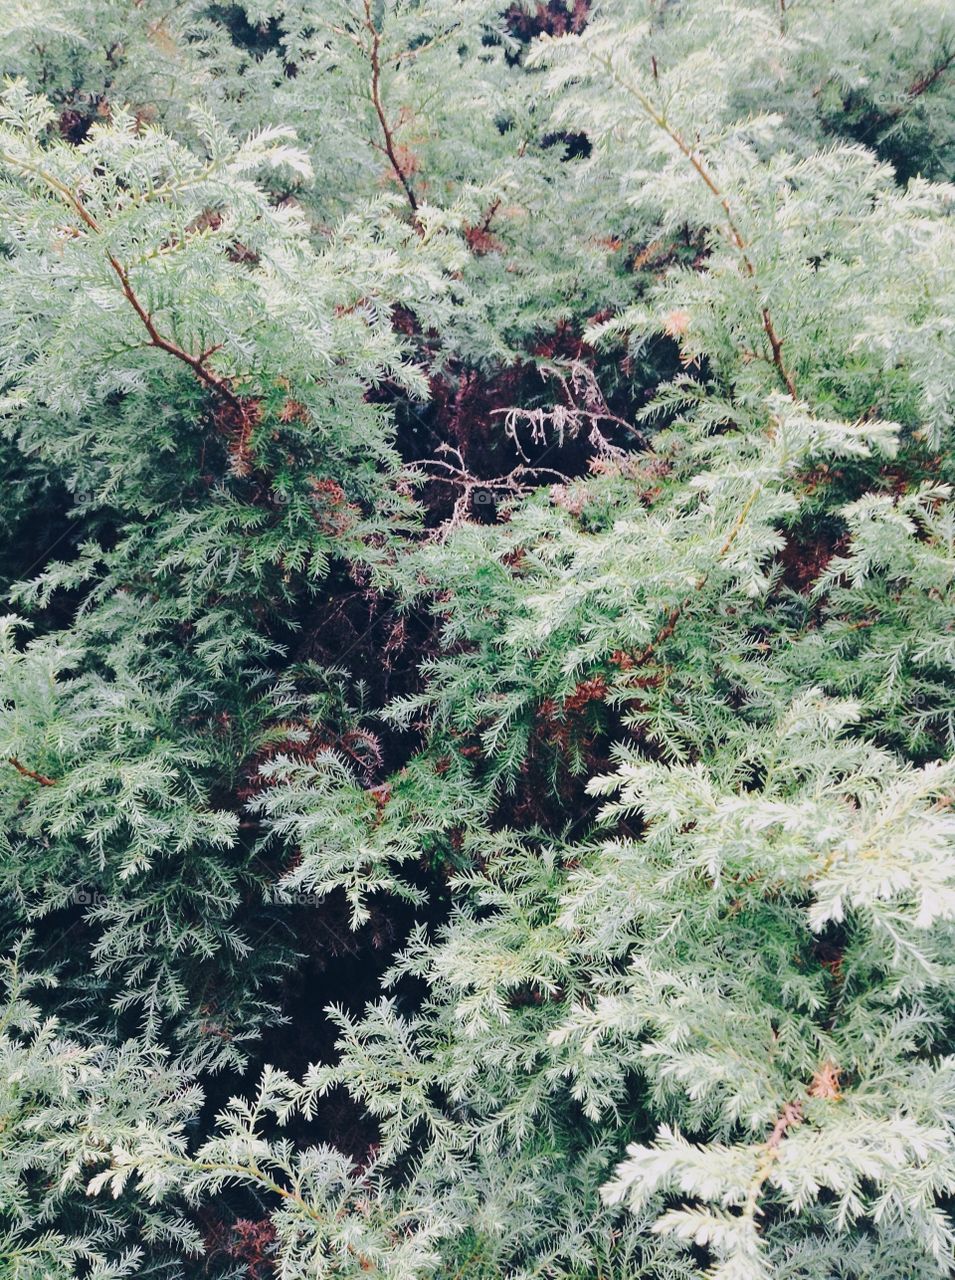 Soft bush. Soft branches 